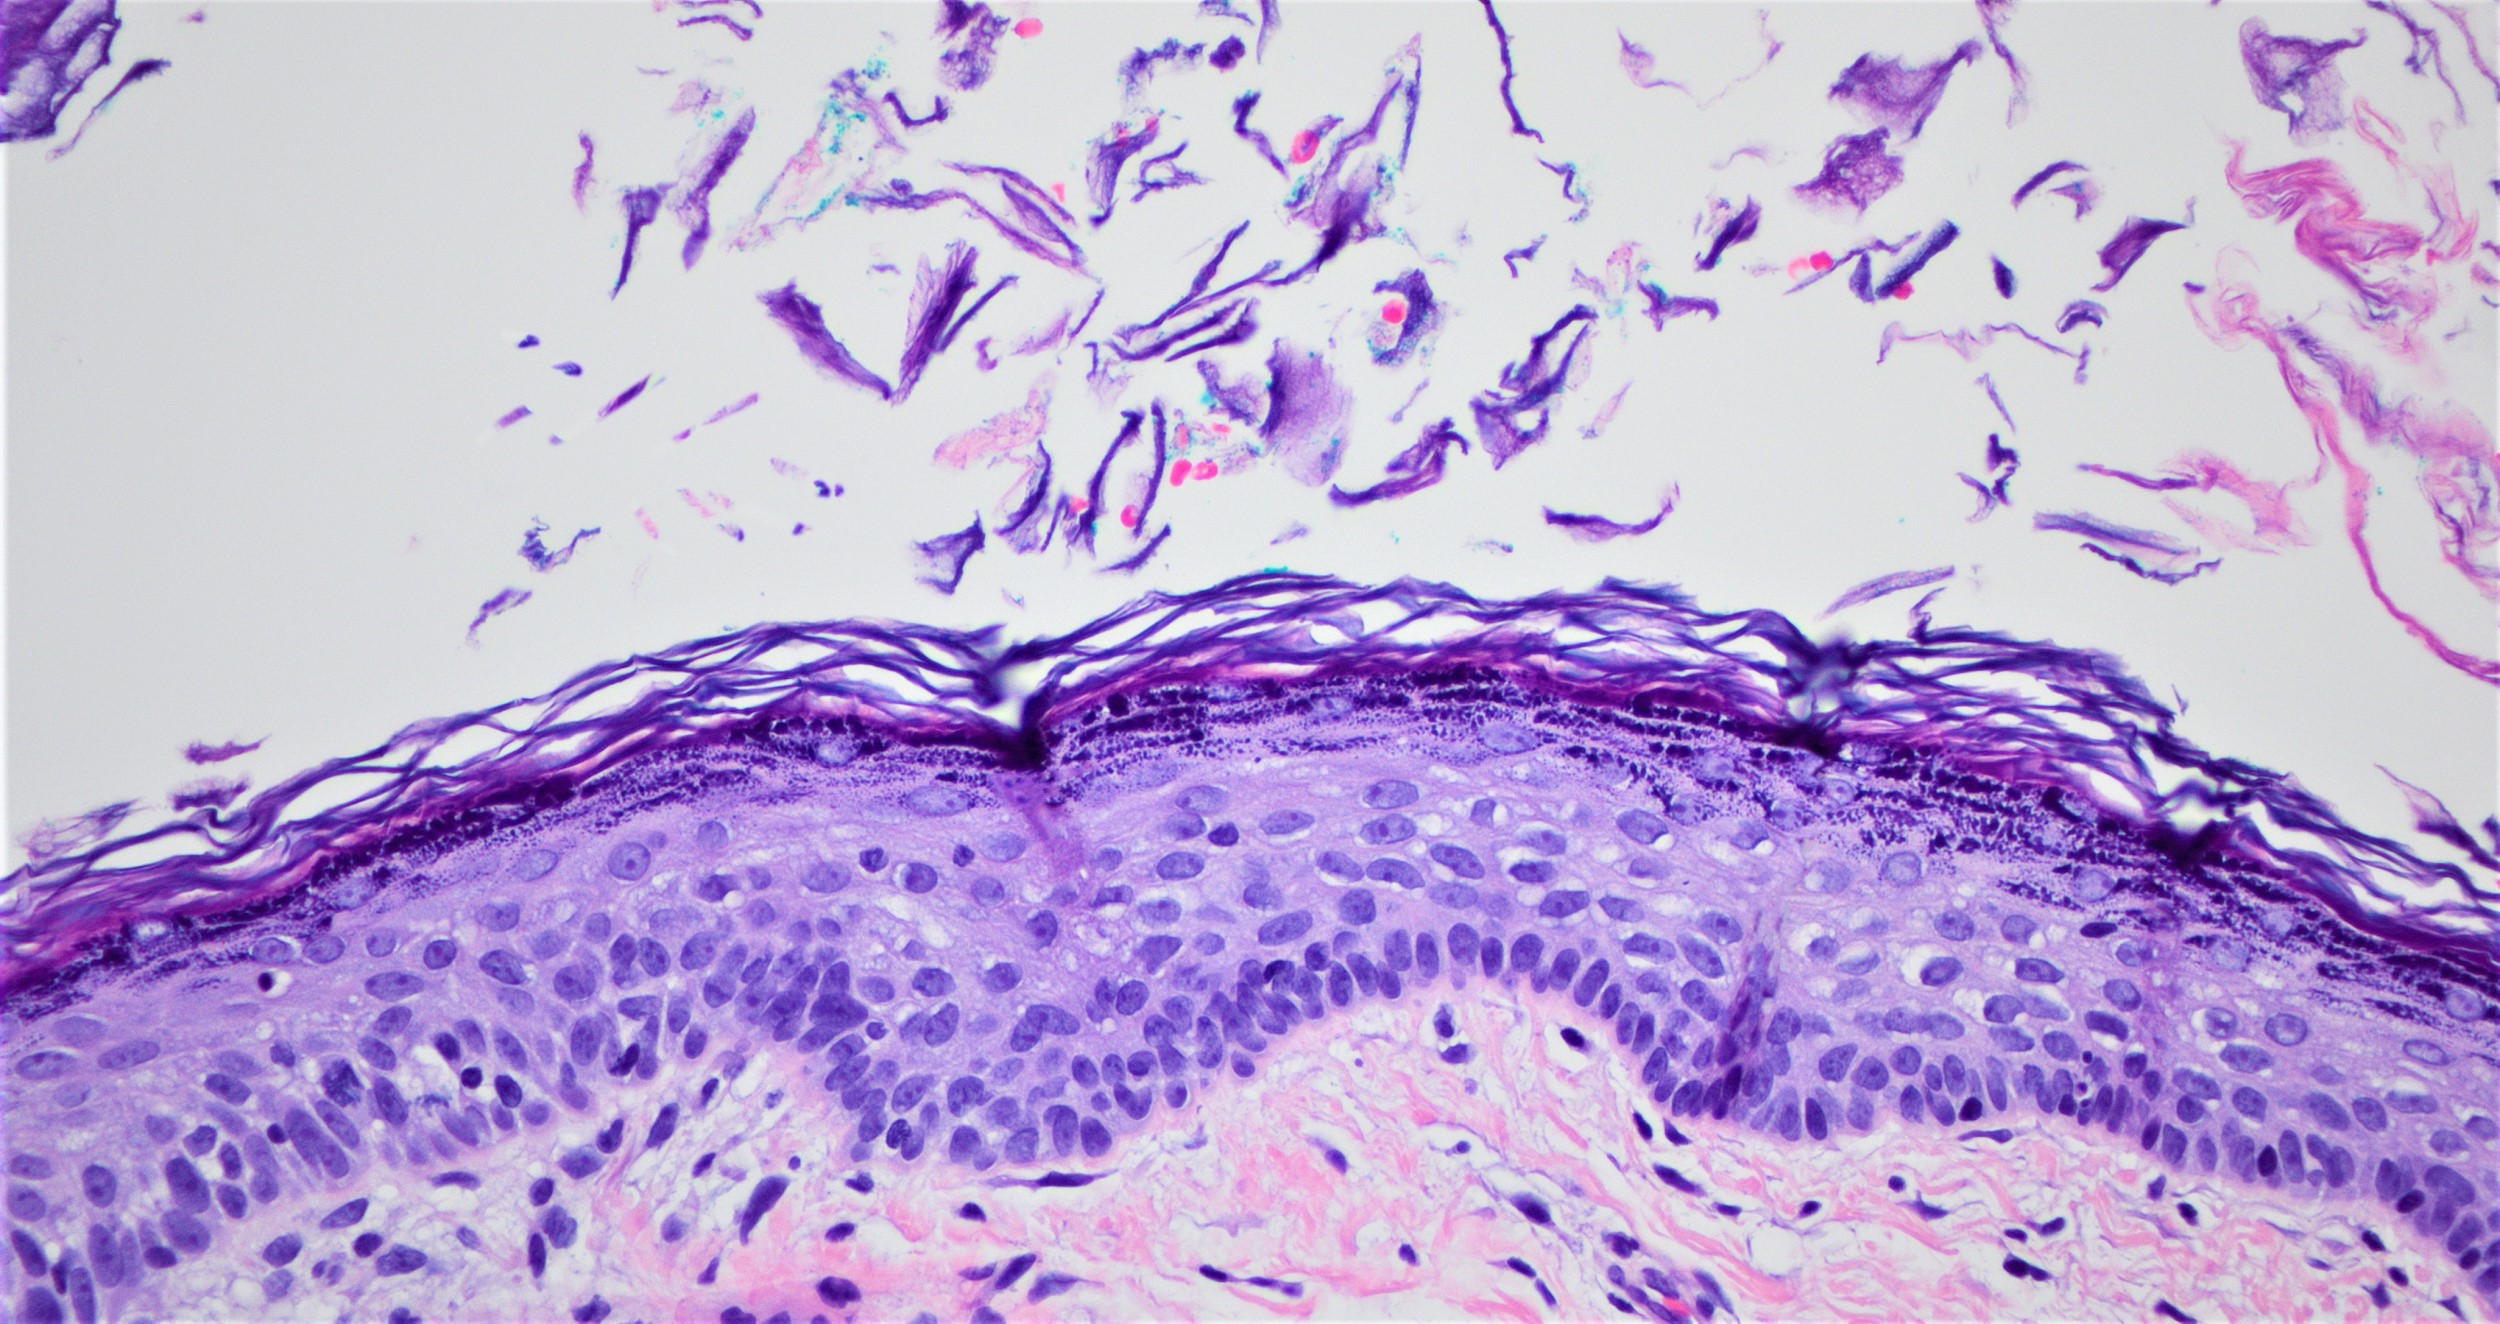 Lining epithelium in dermoid cyst